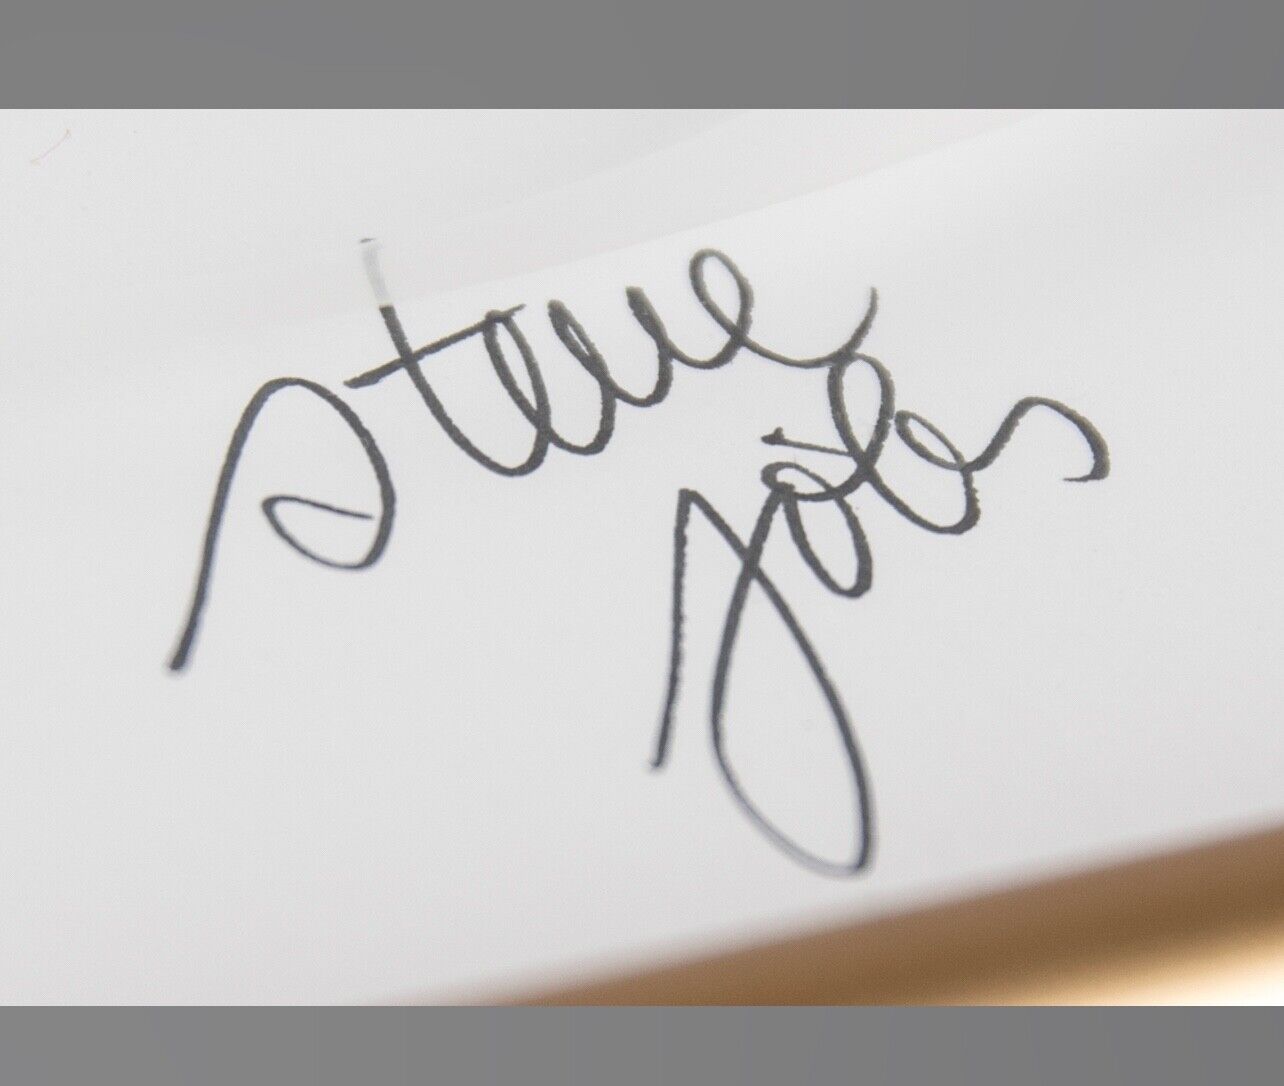 Steve Jobs Signed Apple Document with Logo. Rare Autograph. PSA